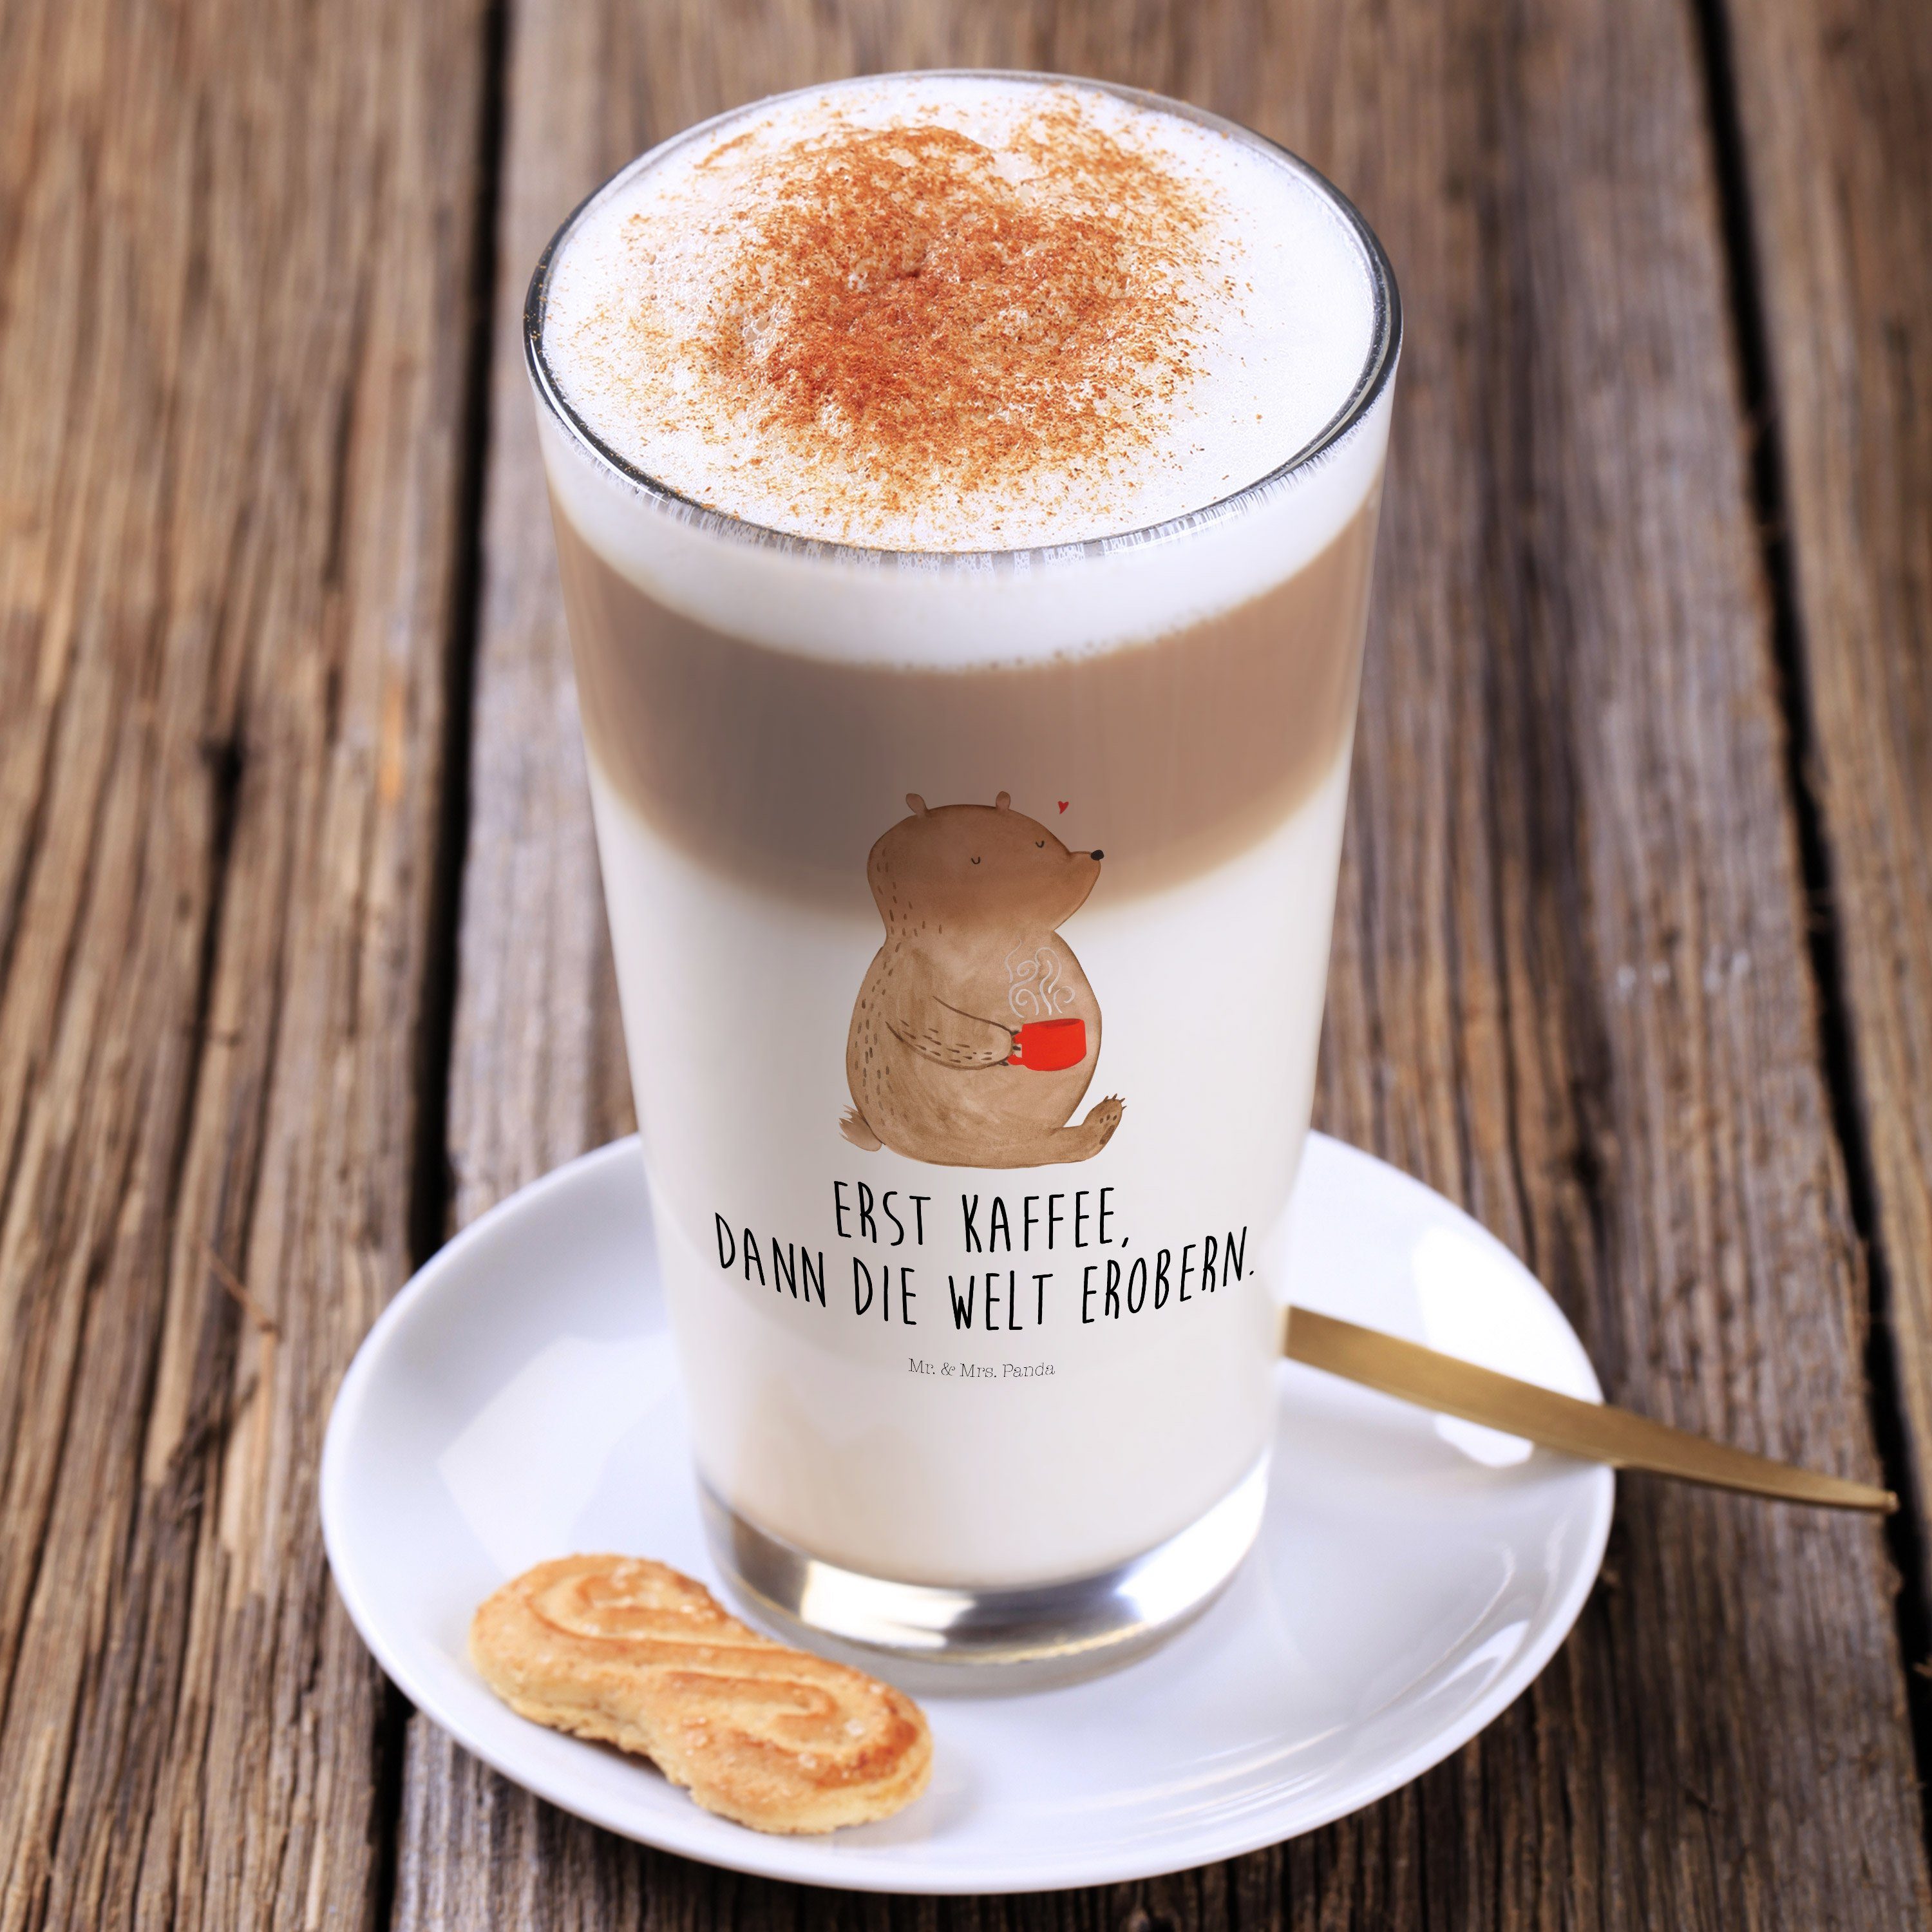 Mr. & - Kaffee Transparent Latte Premium - Bär Geschenk, Glas Mrs. Macchiat, Glas Tasse, Cappuccino Panda